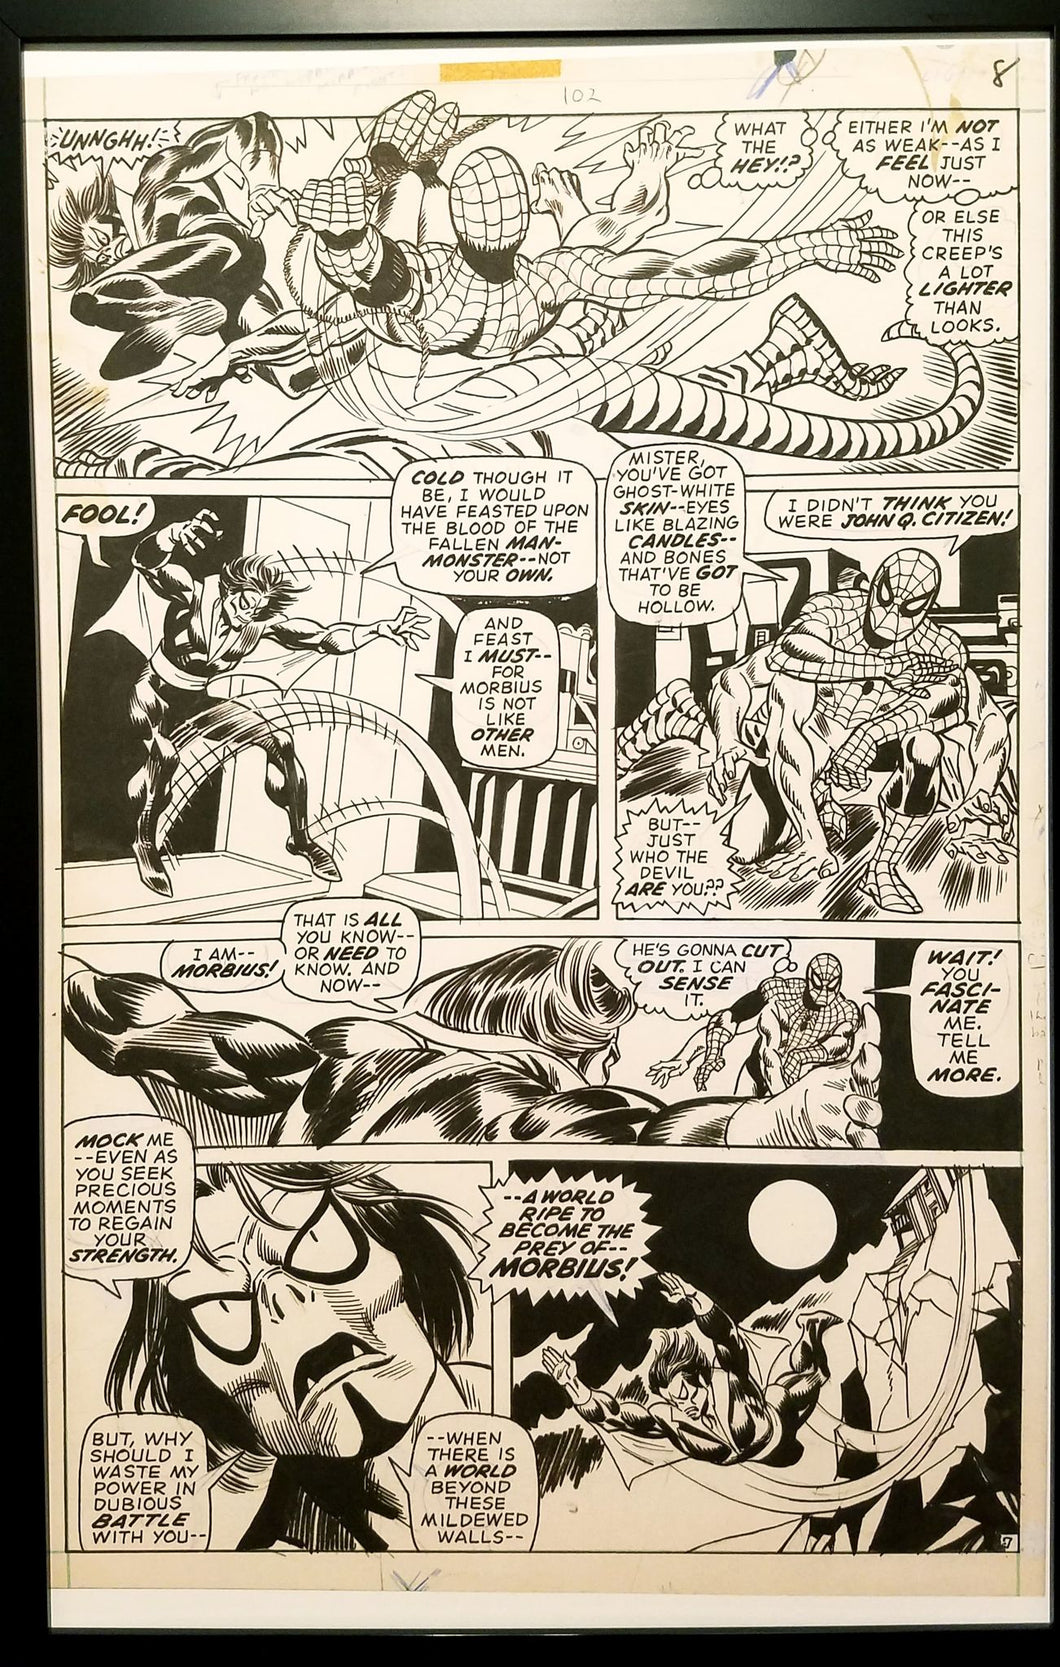 Amazing Spider-Man #102 pg. 7 Gil Kane 11x17 FRAMED Original Art Poster Marvel Comics